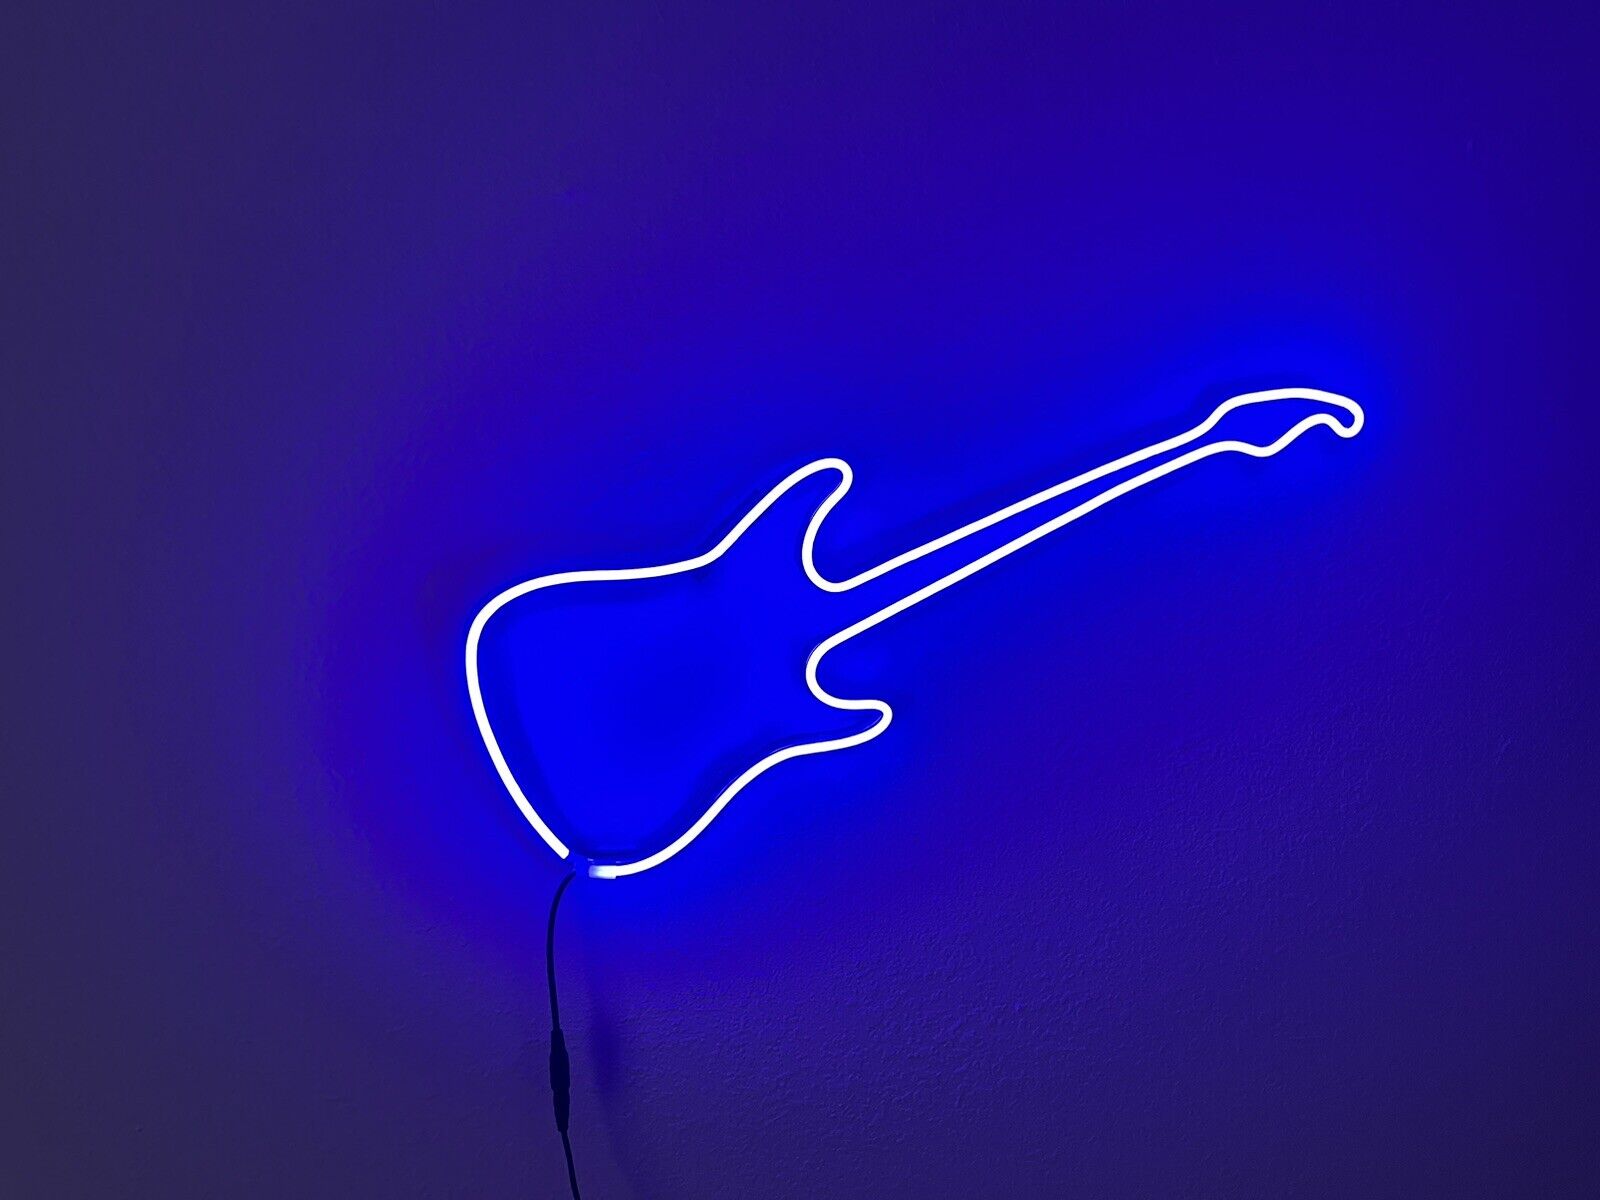 24” Guitar Neon Sign, Wall Decor, Electric Guitar Music Studio Lighting Artwork